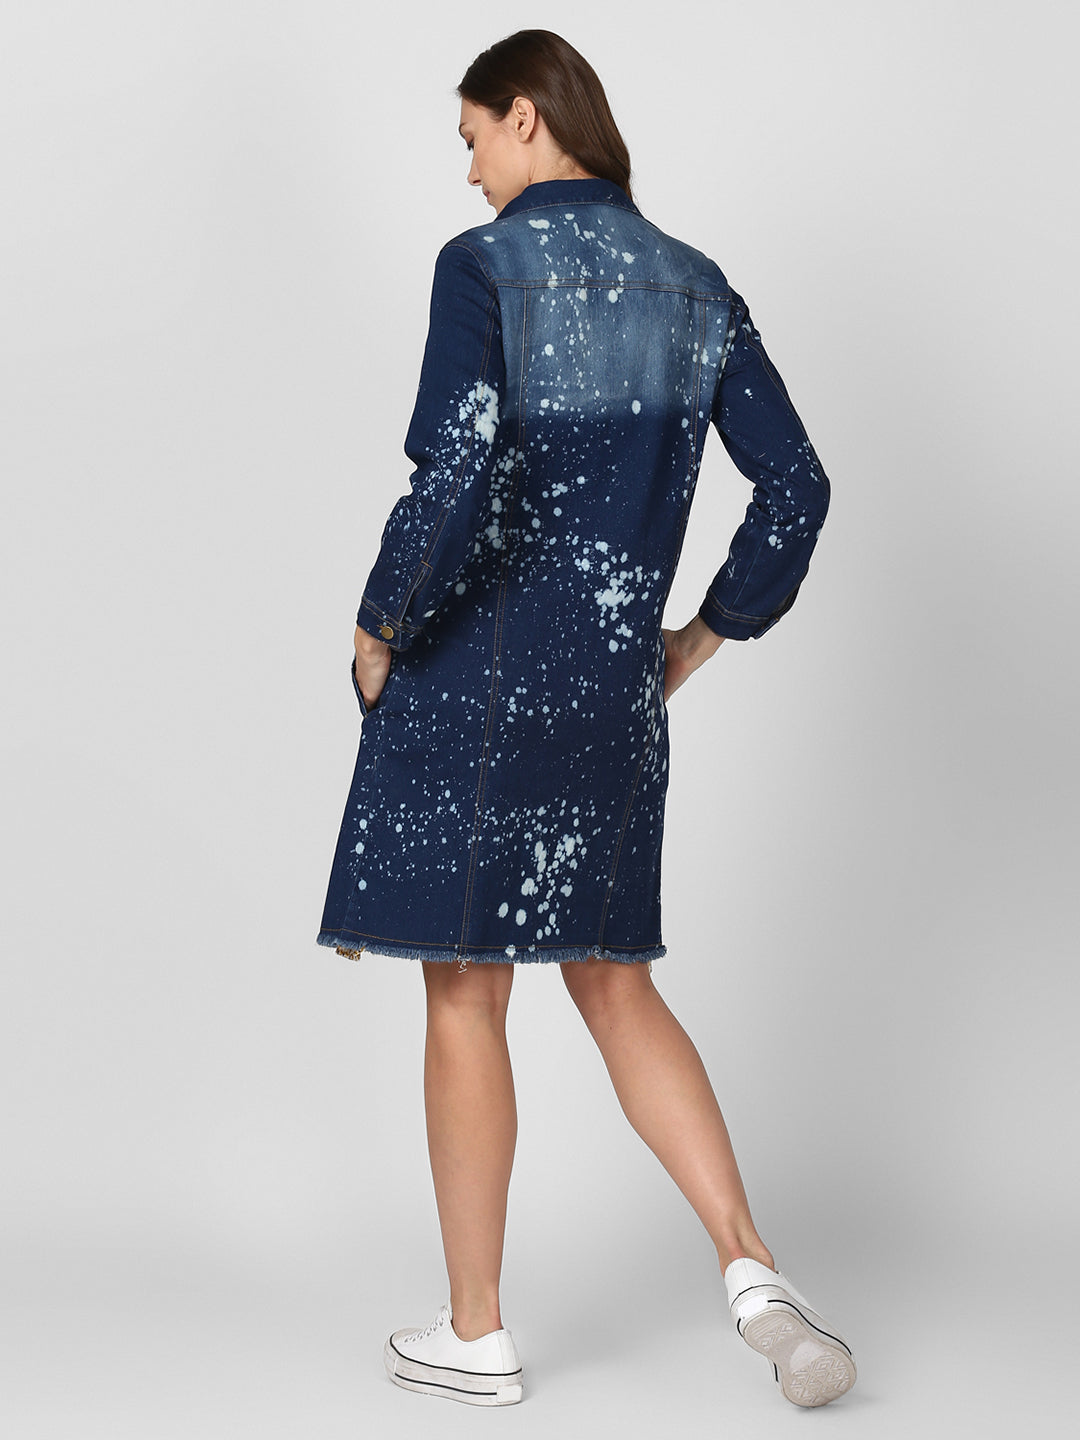 Women's Long Overcoat Style Denim Jacket with Splash effect